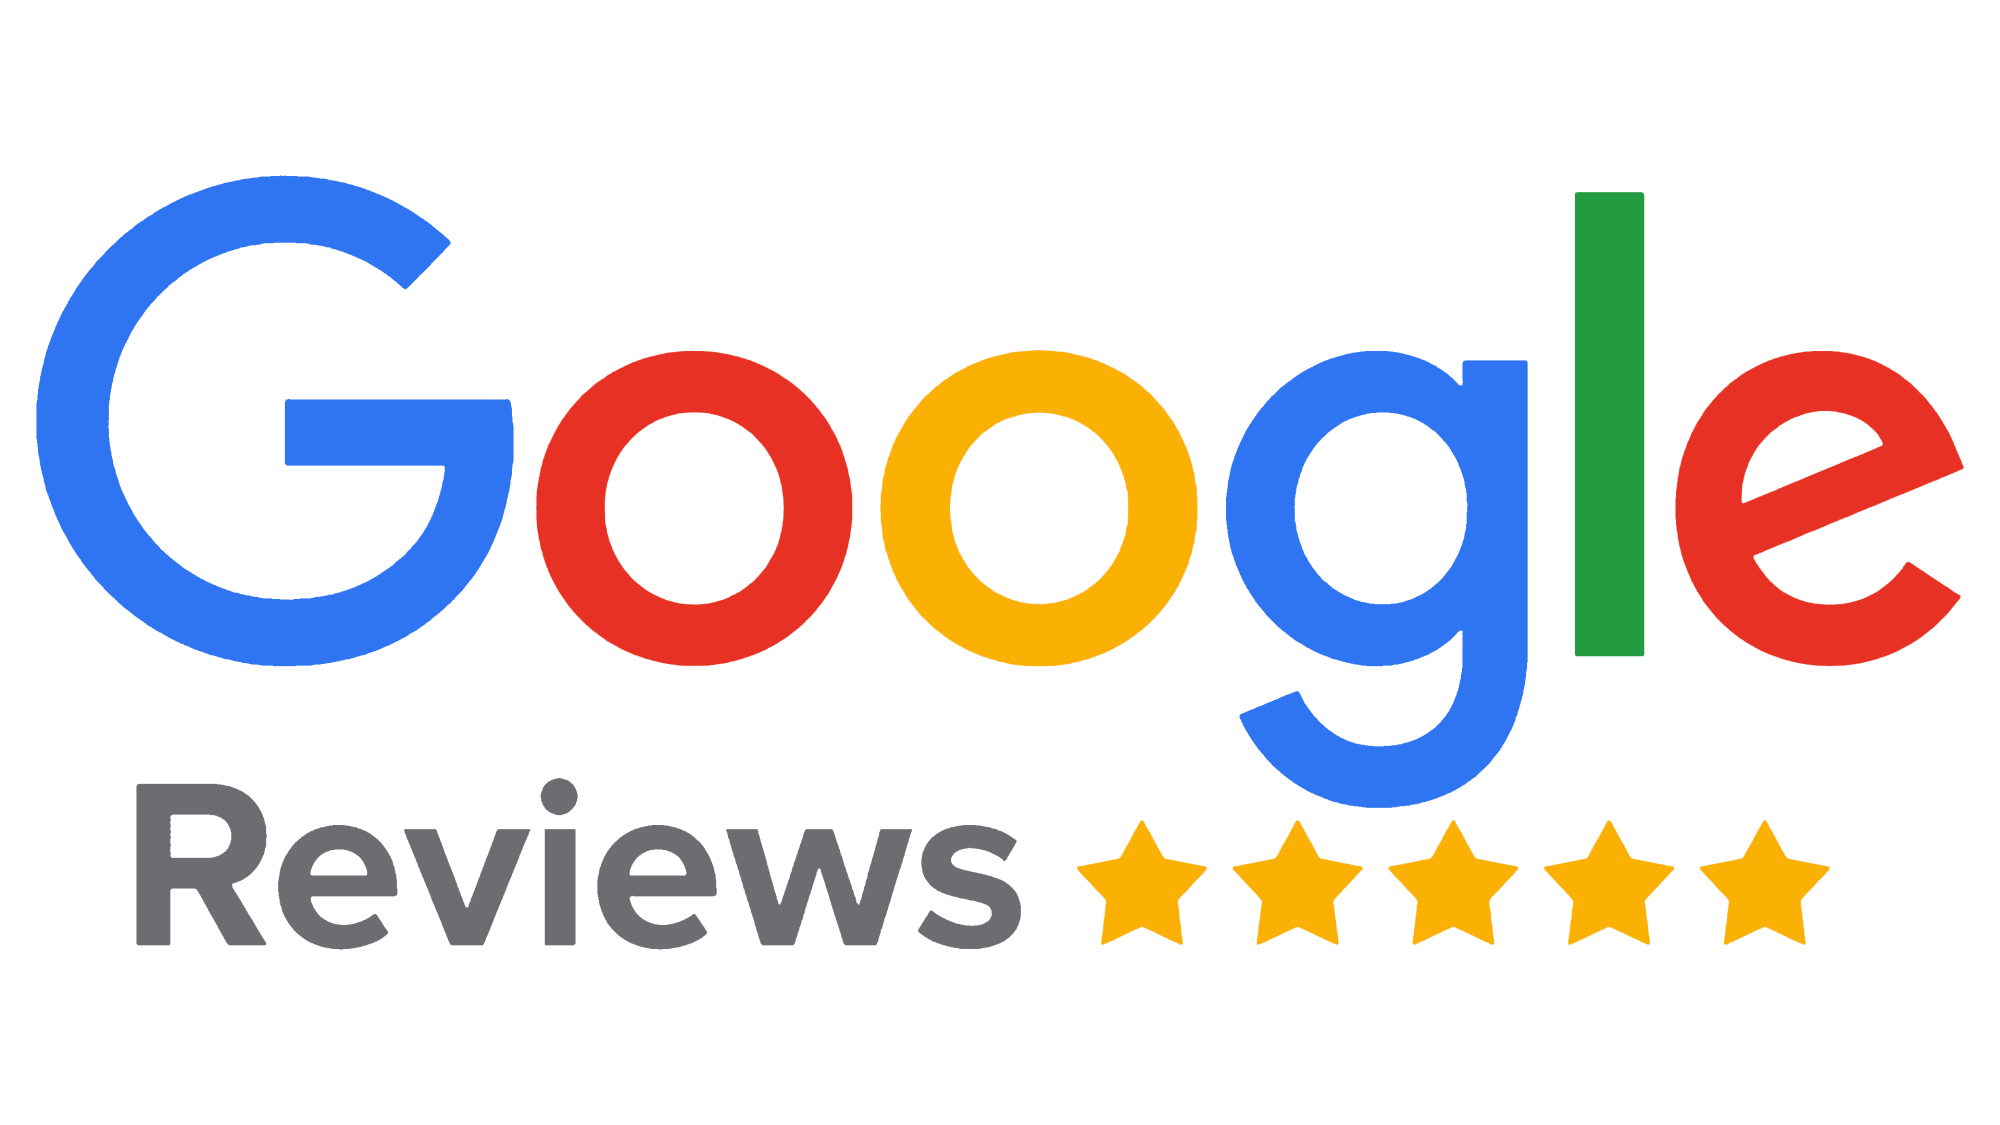 SJD Taxi Google Reviews